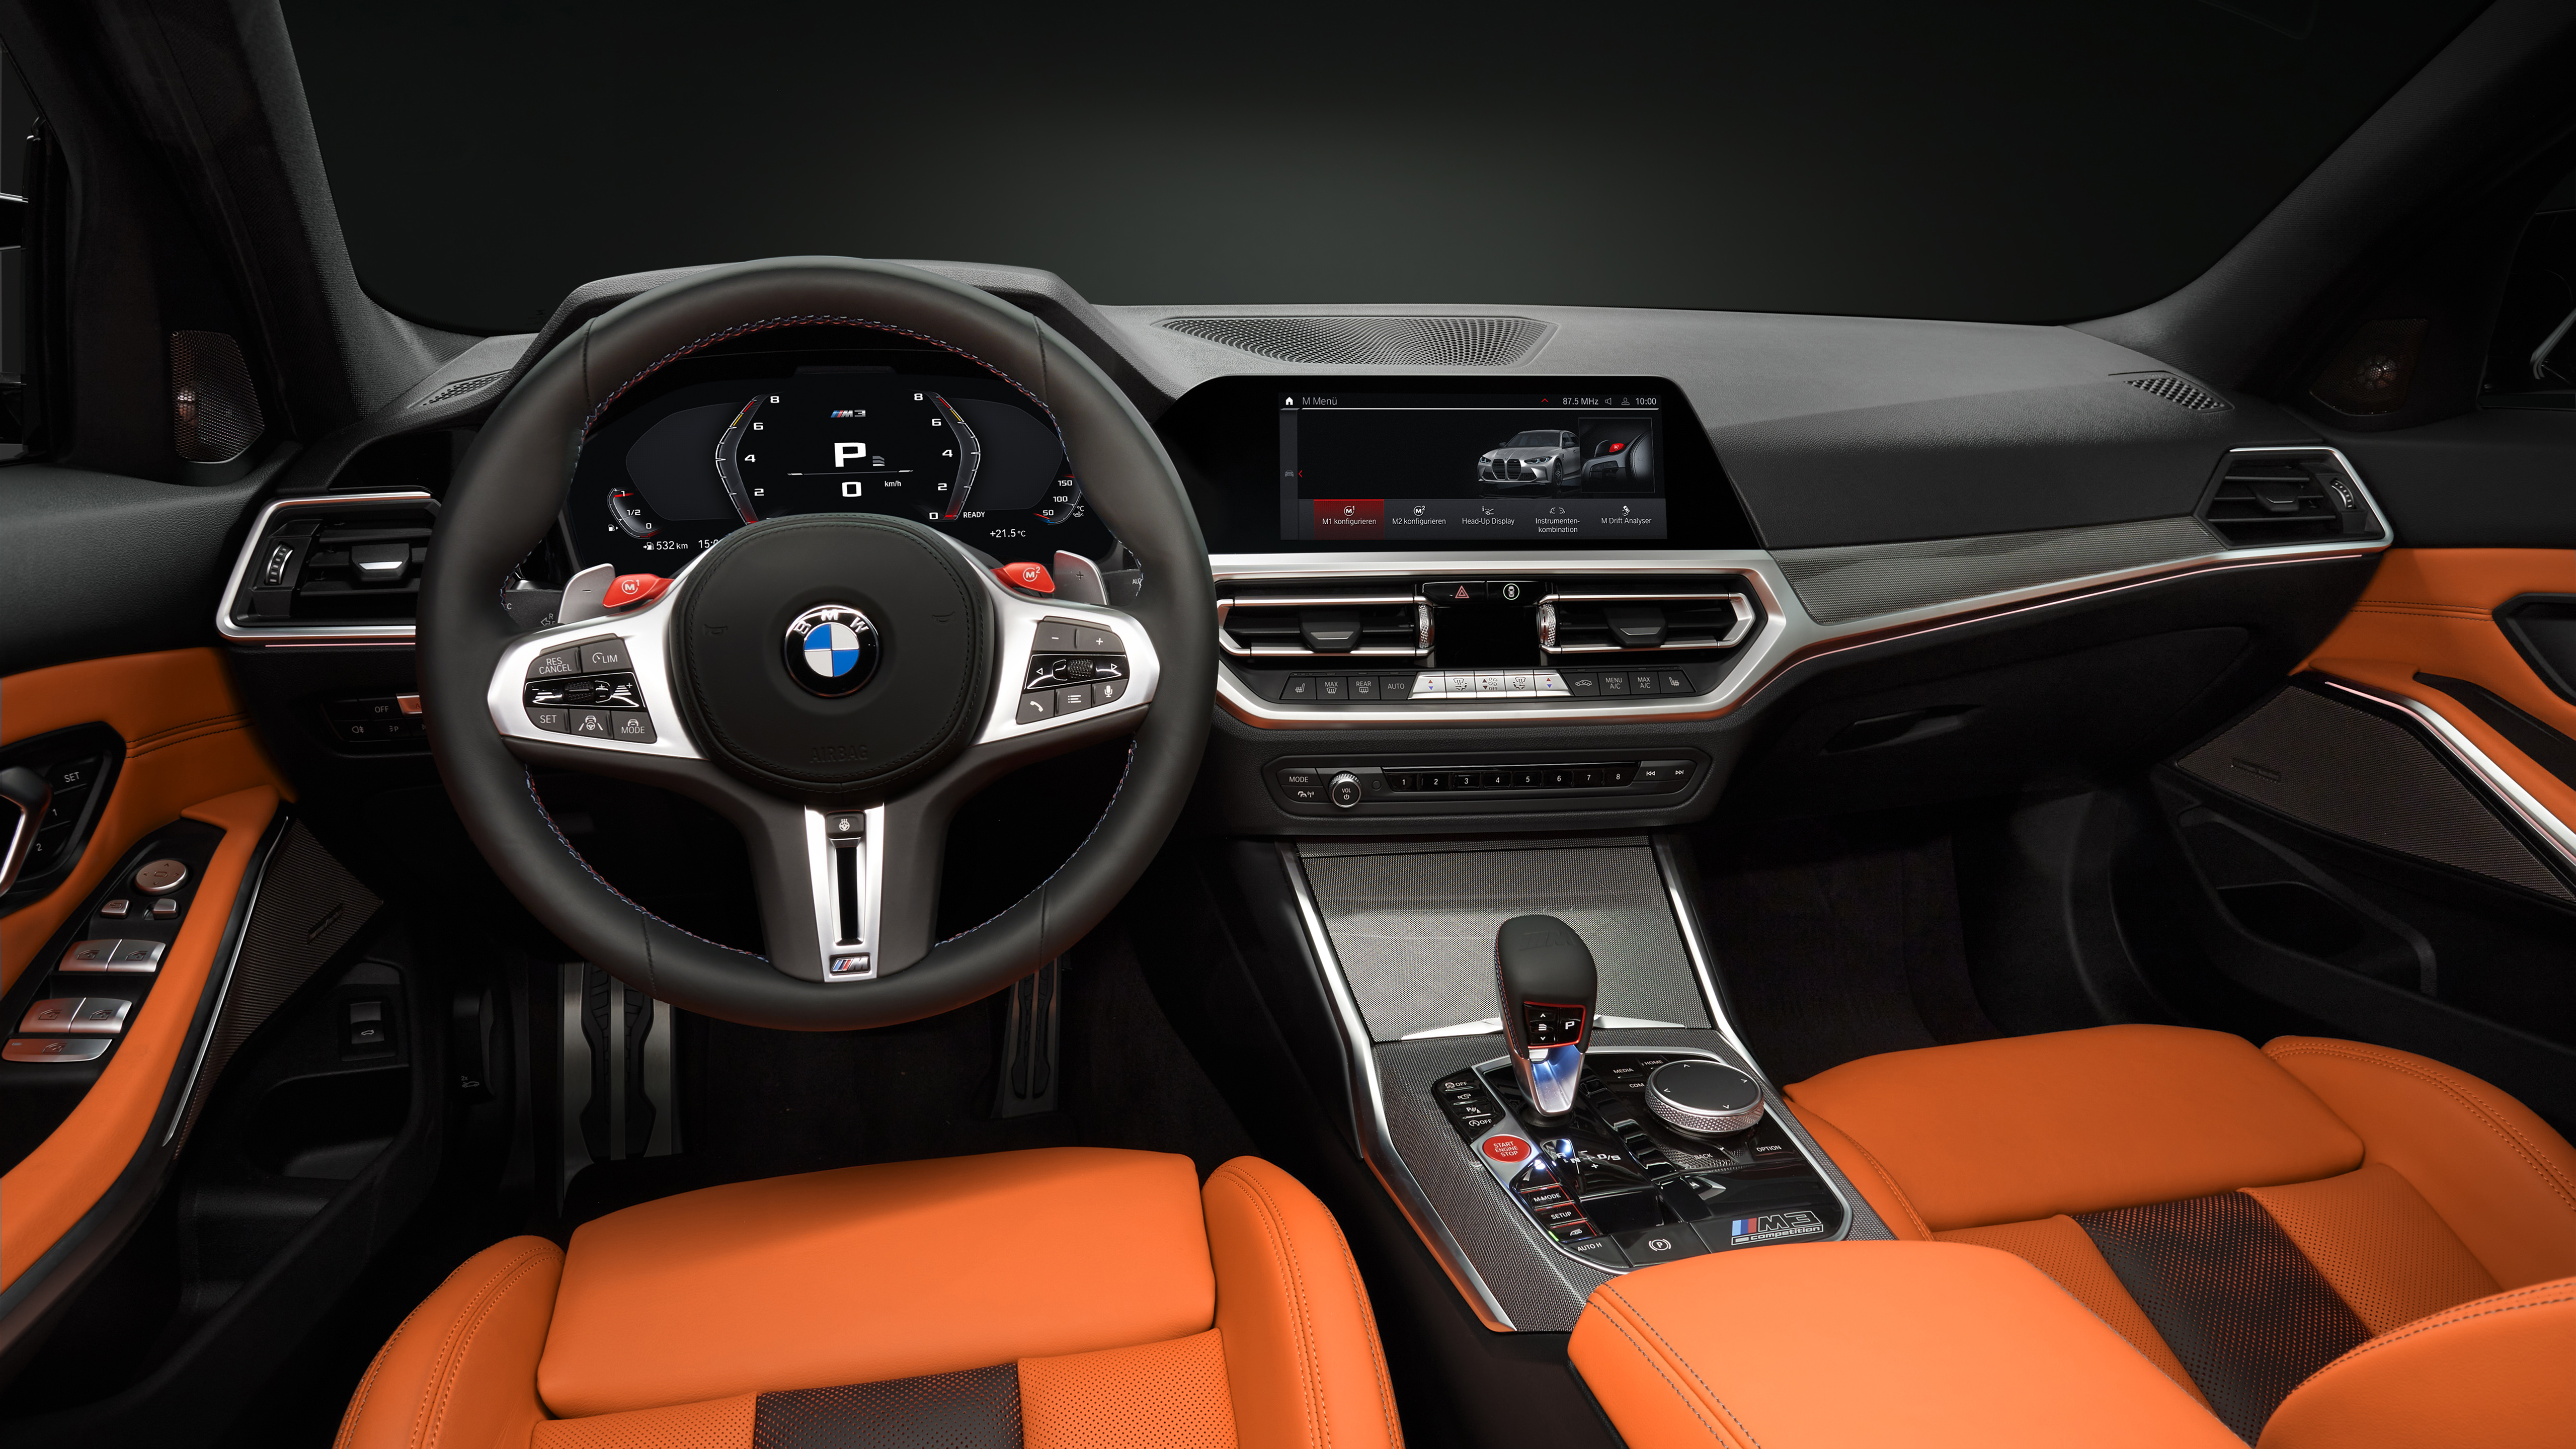 BMW M3 Competition 2020 Interior 4K Wallpaper | HD Car ...